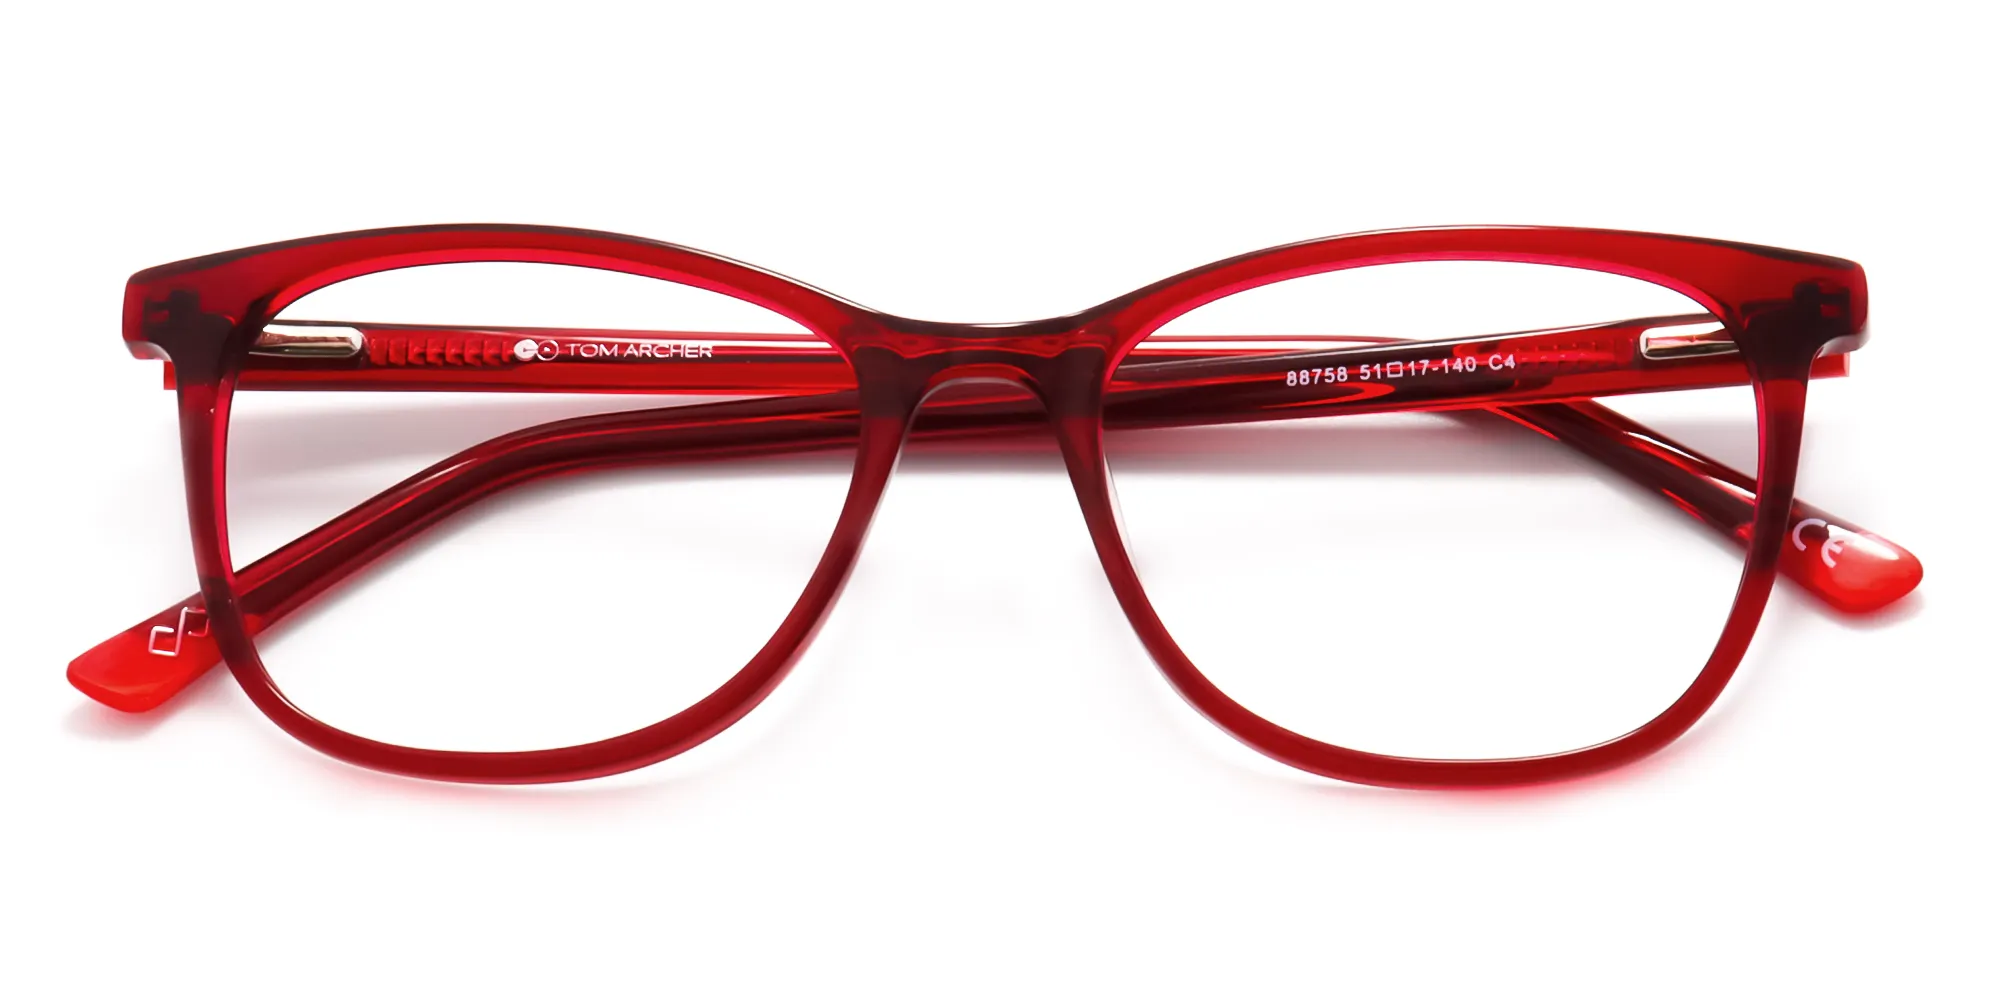 red square glasses - 2